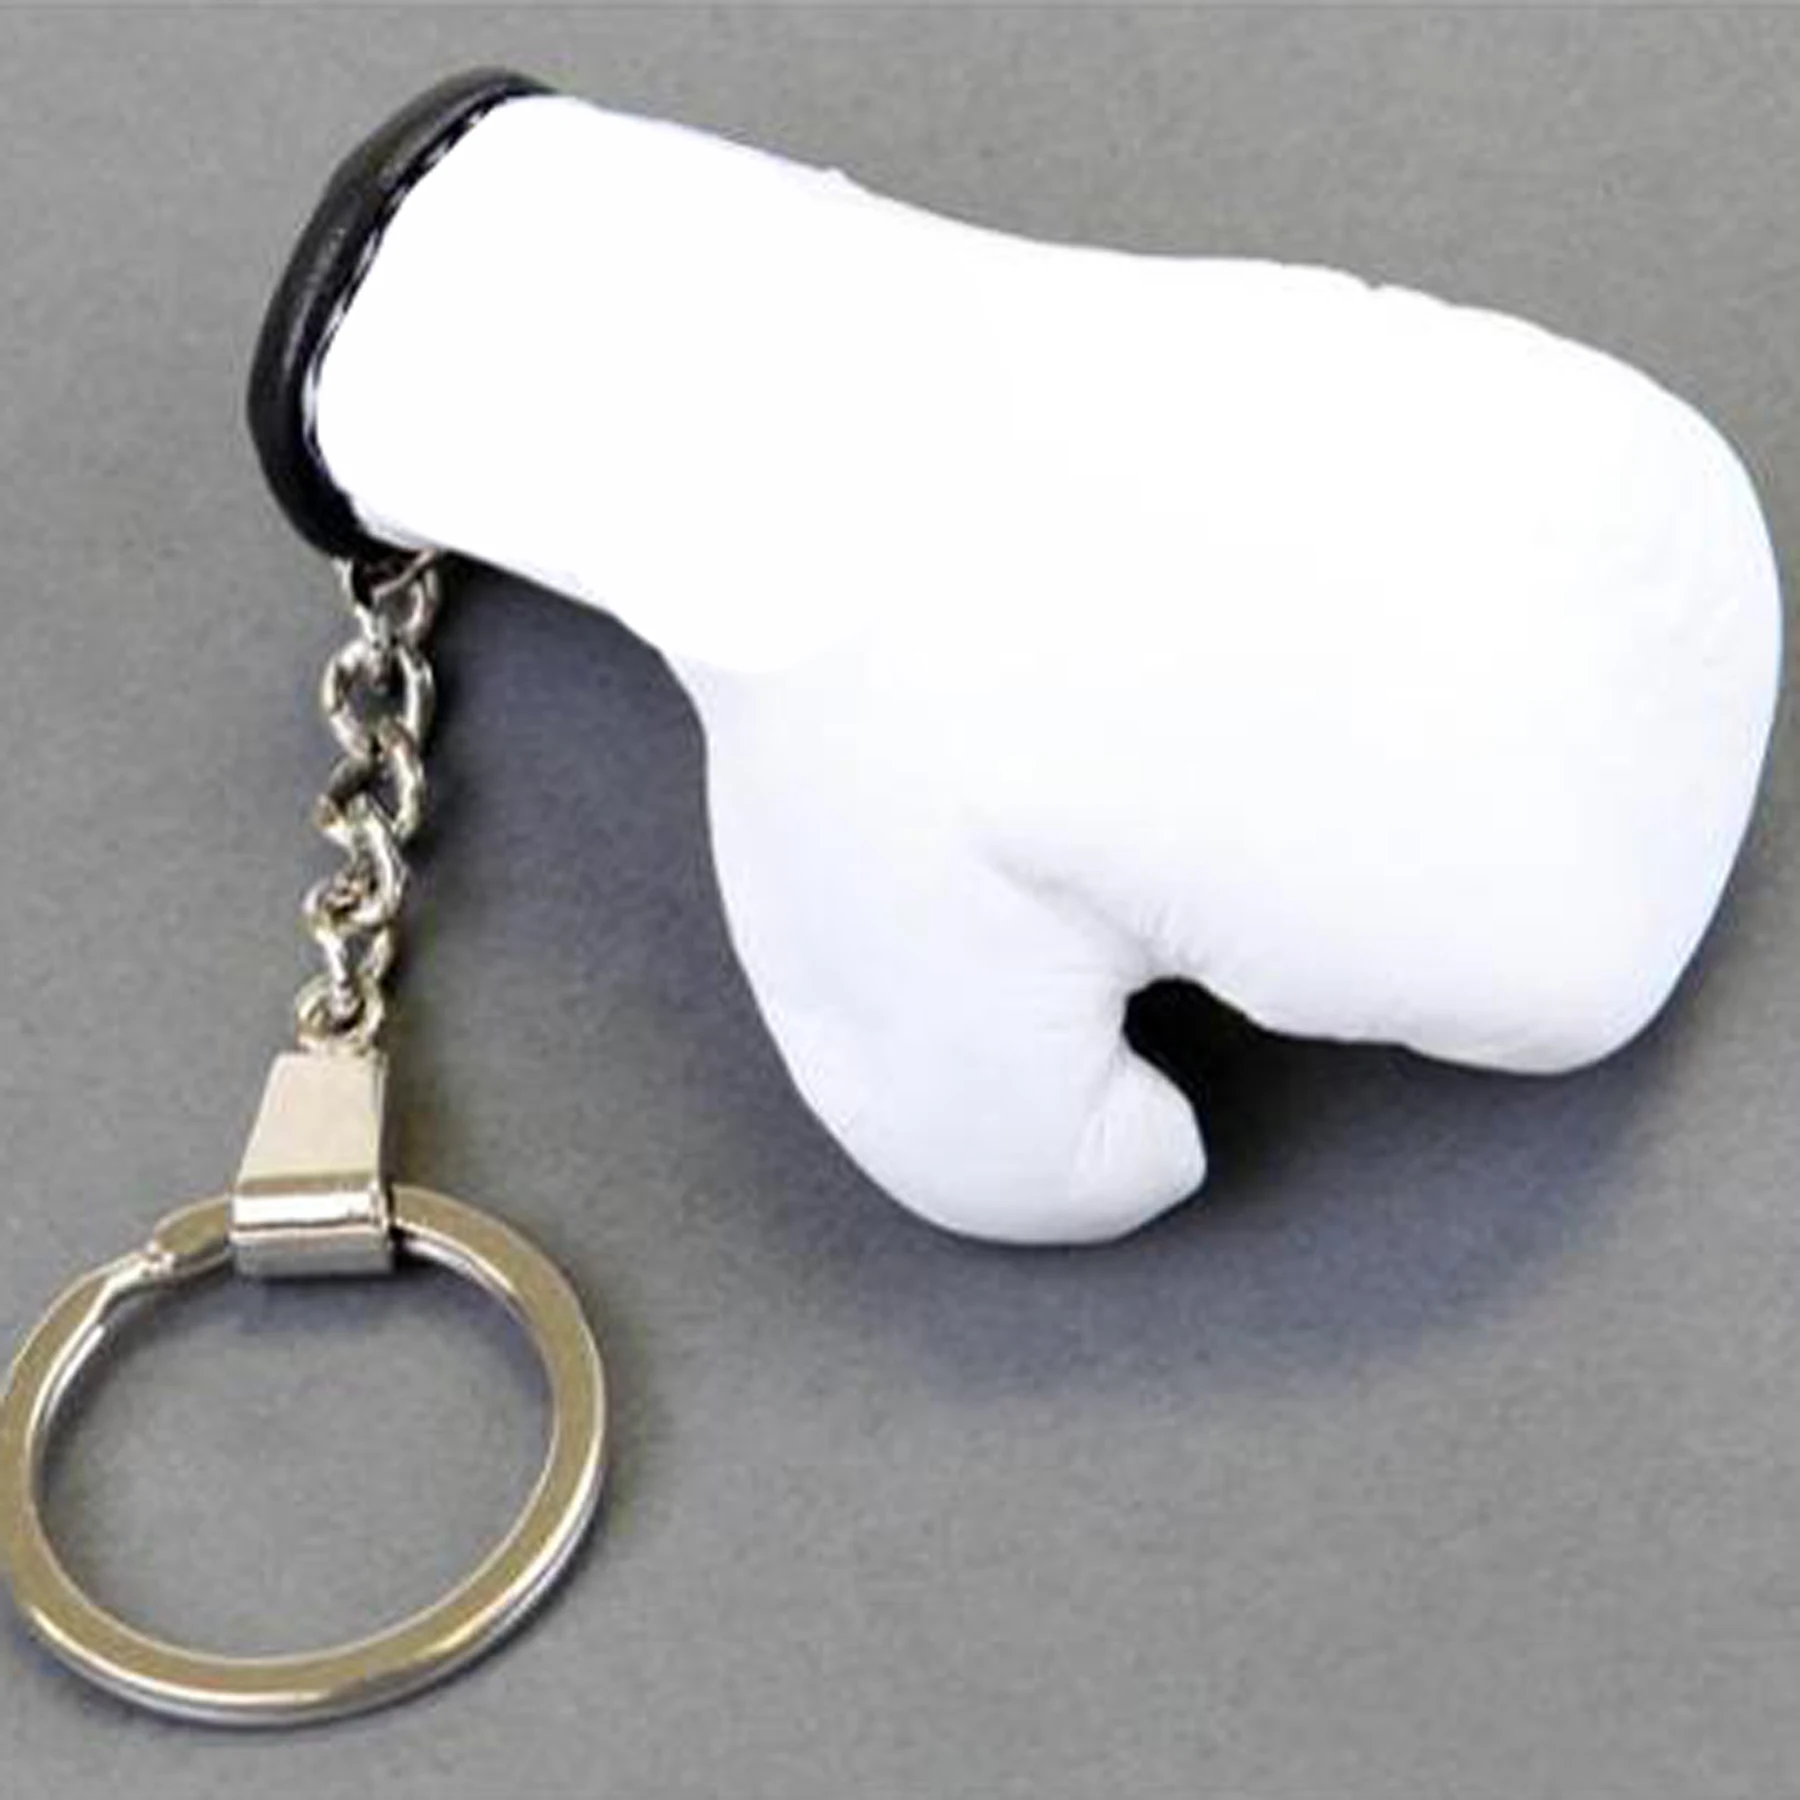 Keychain Mini boxing gloves key chain ring flag key ring cute france french 